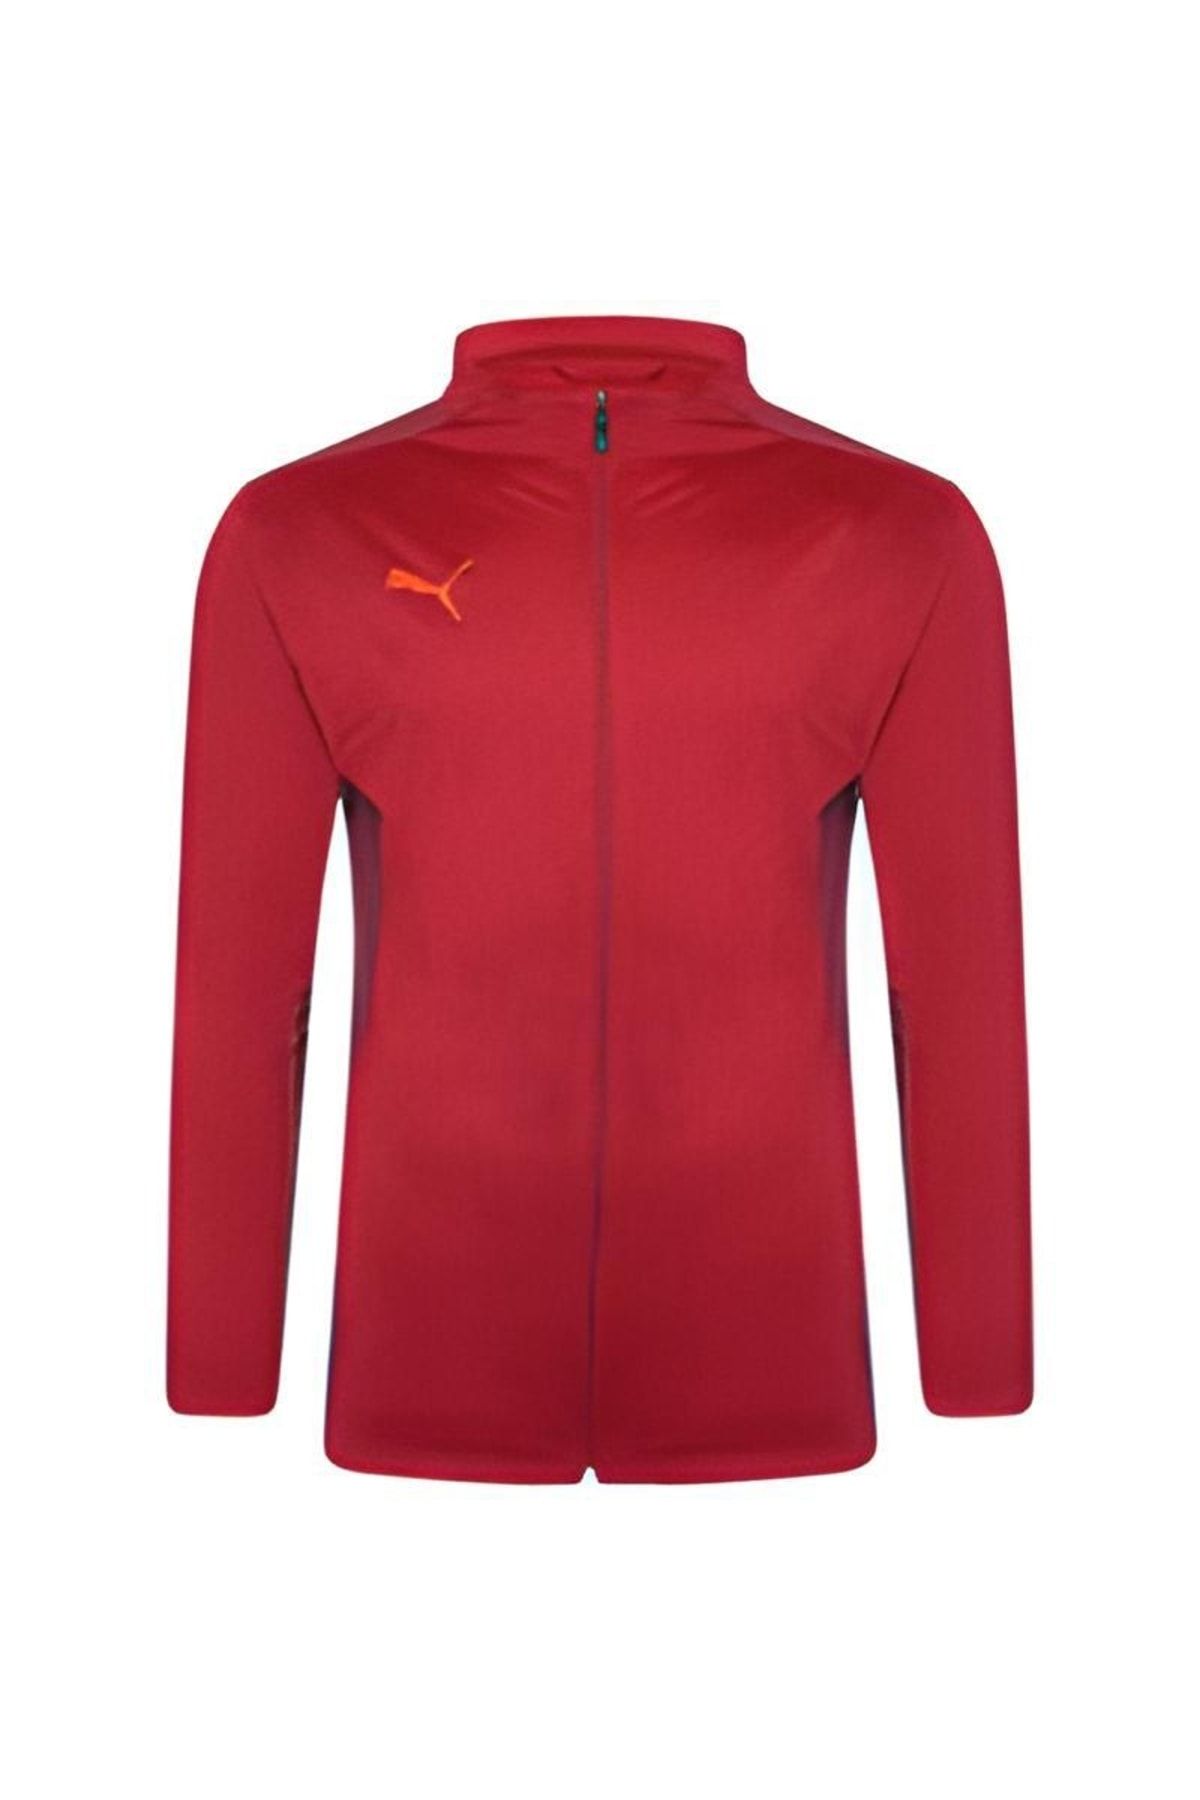 Puma Team Cup Eşofman Ceketi (biber Kırmızısı)